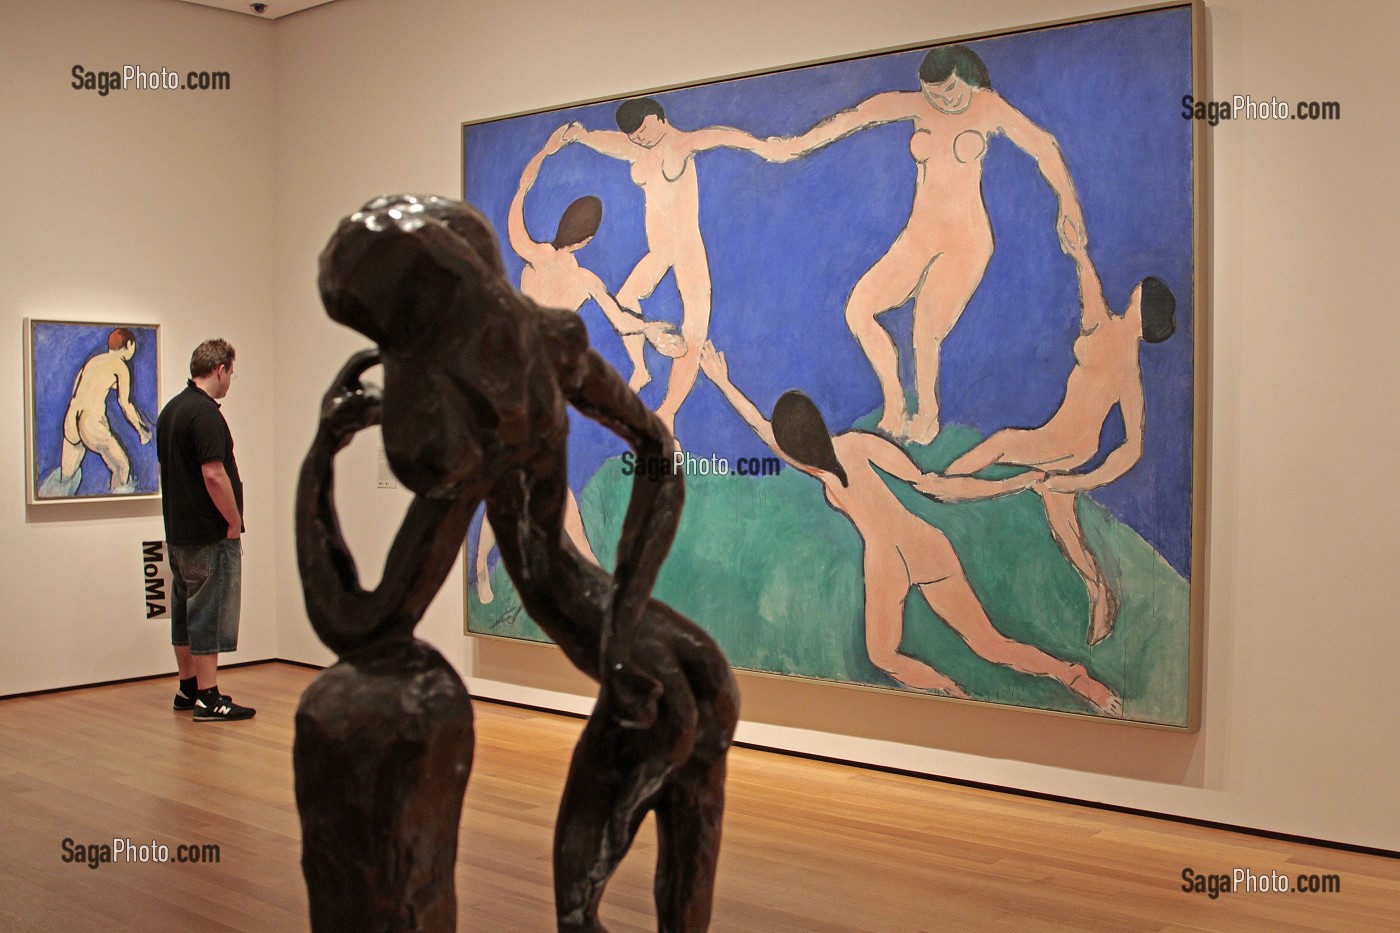 'LA DANSE', PEINTURE DE HENRI MATISSE (1869-1954), MOMA (MUSEUM OF MODERN ART), MUSEE D'ART MODERNE, QUARTIER DE MIDTOWN, MANHATTAN, NEW YORK CITY, ETAT DE NEW YORK, ETATS-UNIS 